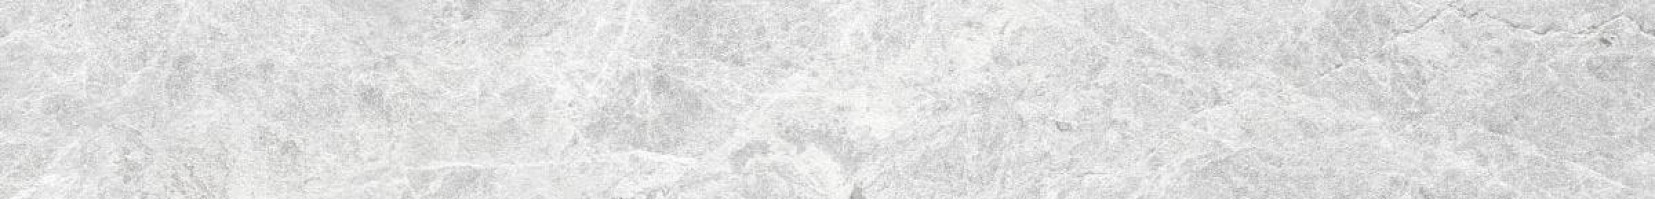 Плинтус Vitra Marmostone Светло-серый 7ЛПР 7.5x60 K951306LPR01VTE0